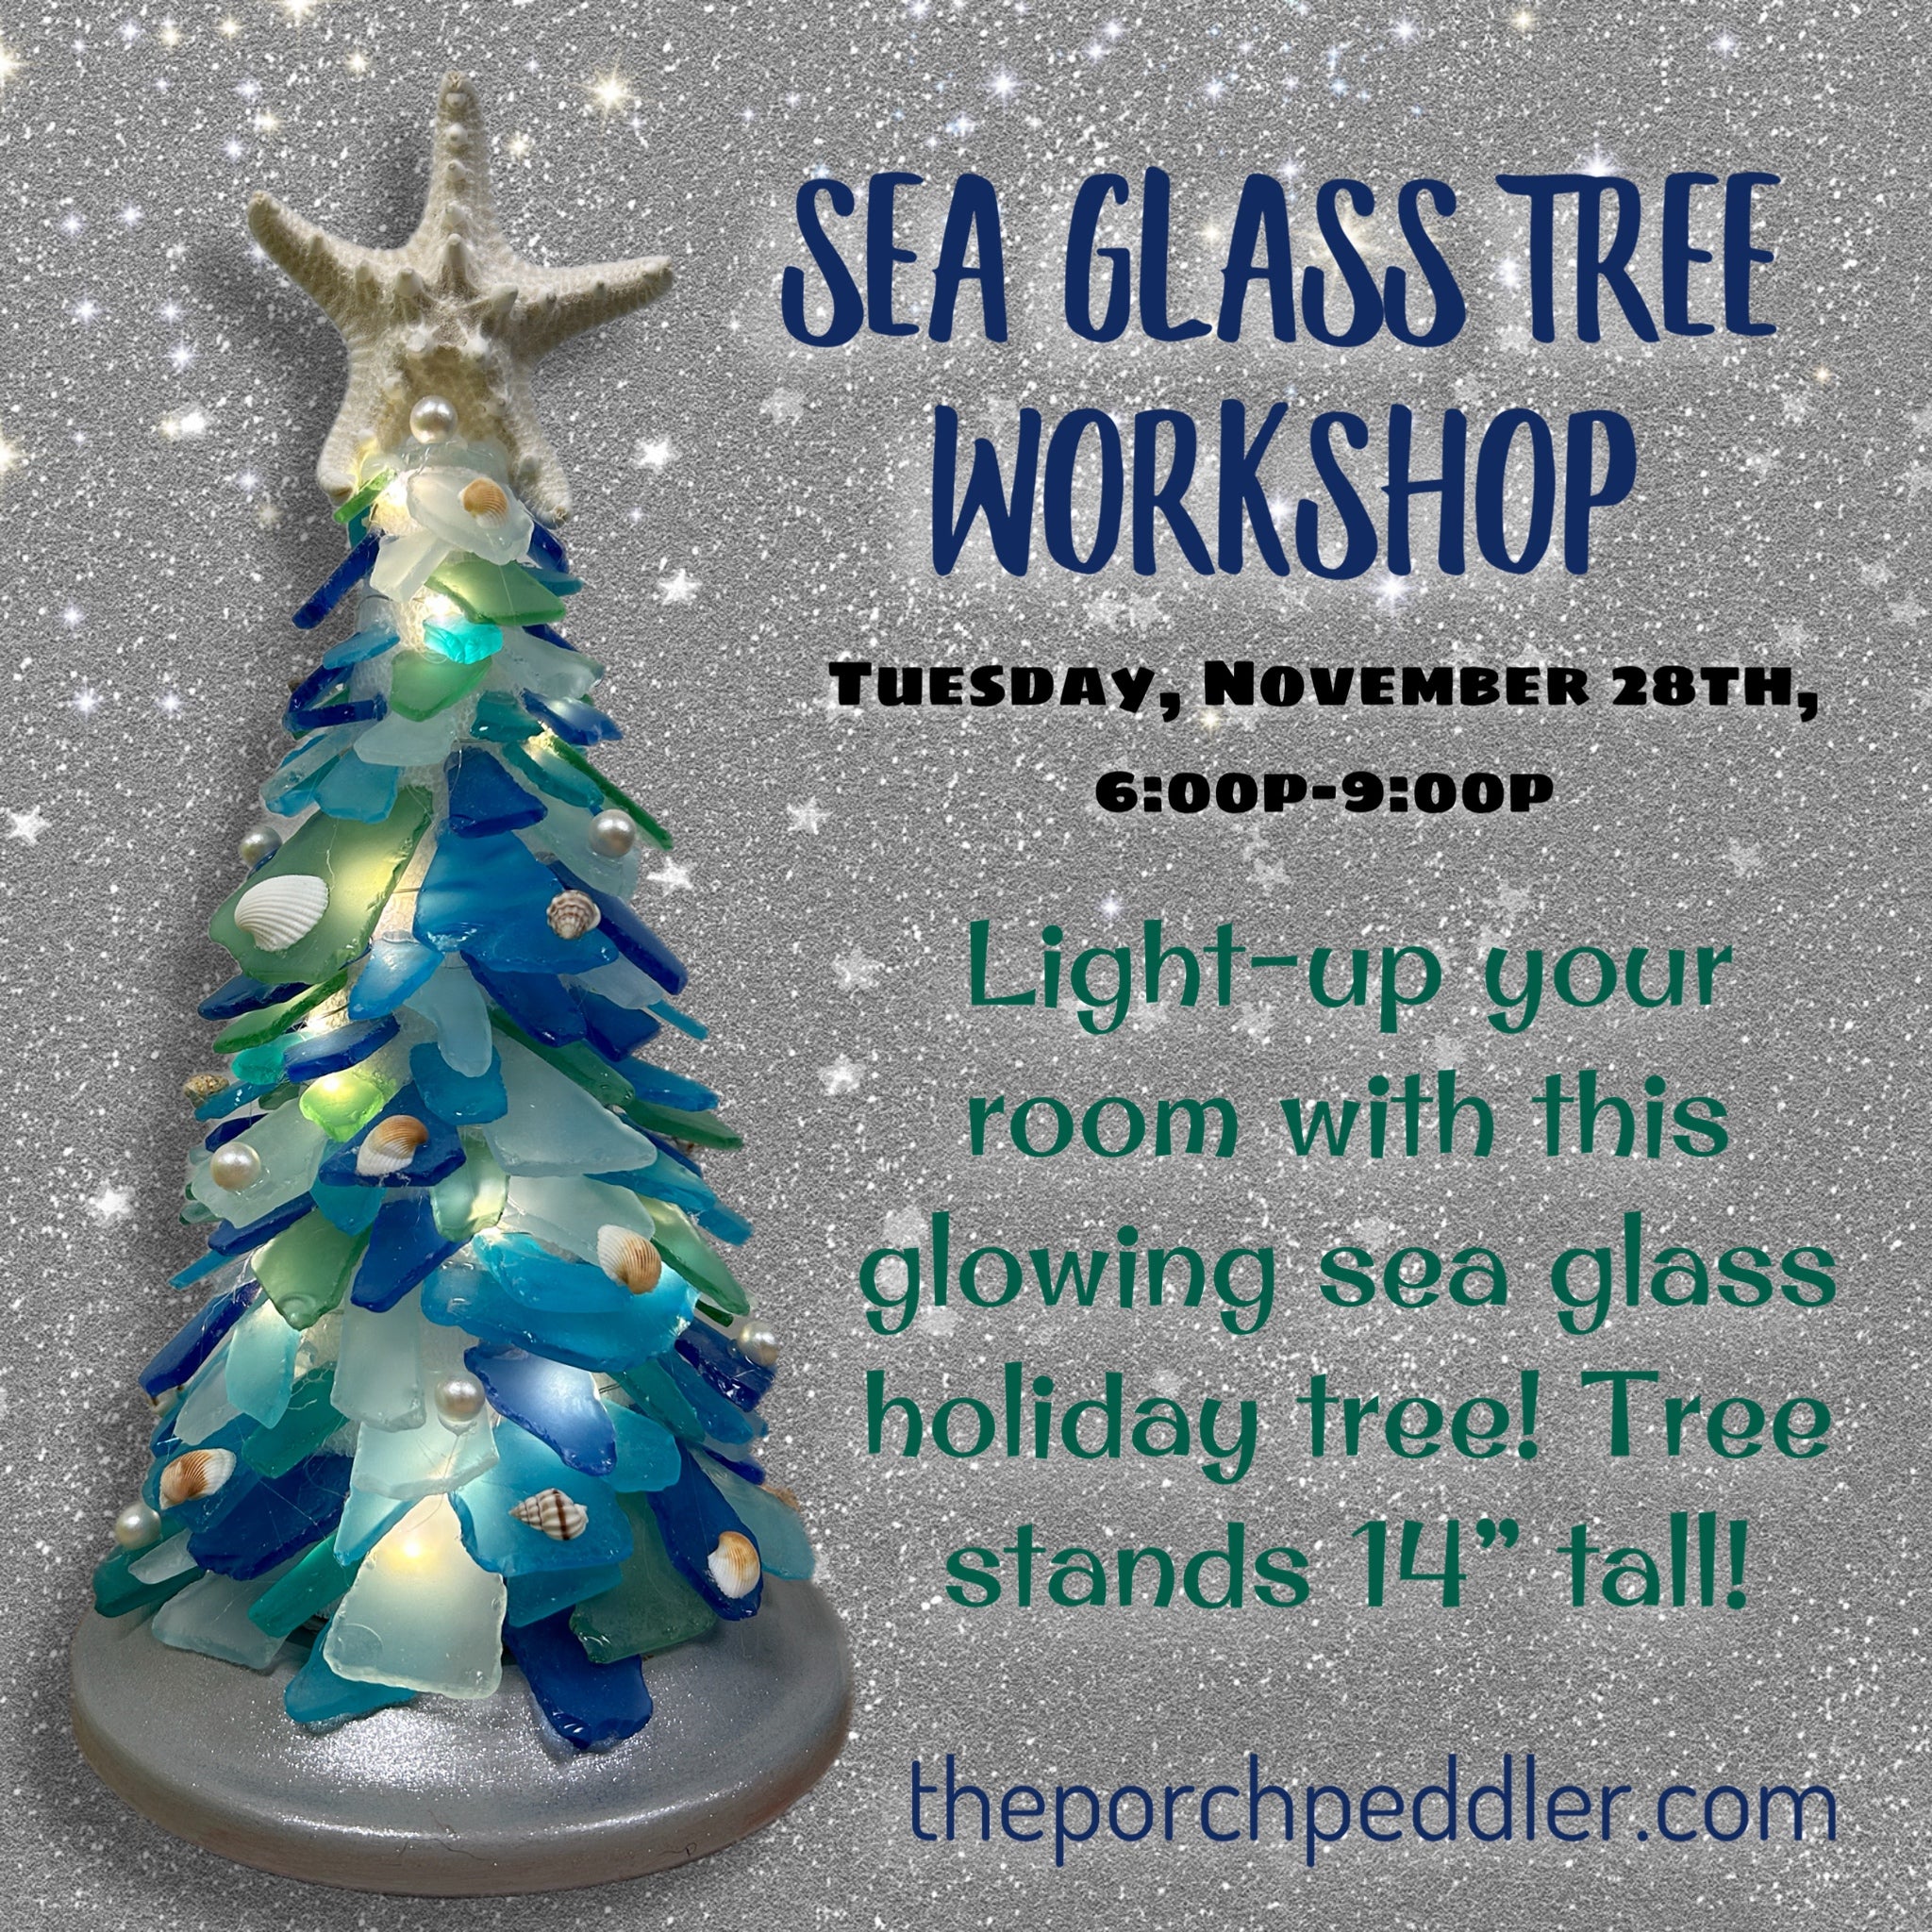 November 28th - Sea Glass Tree Workshop (6-8p)